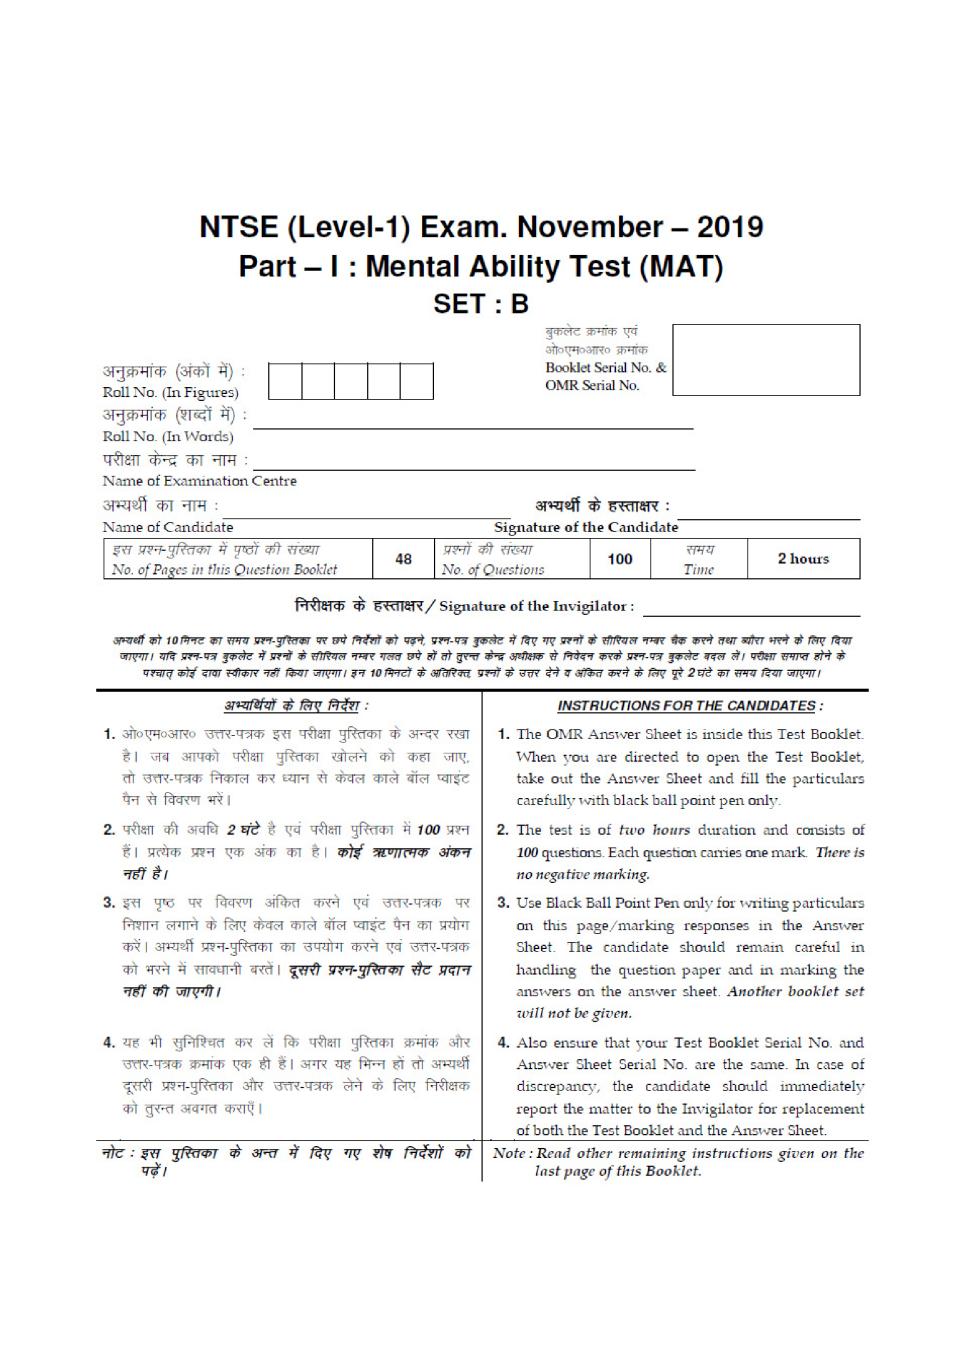 Haryana NTSE Nov 2019 MAT Question Paper Set B - Page 1